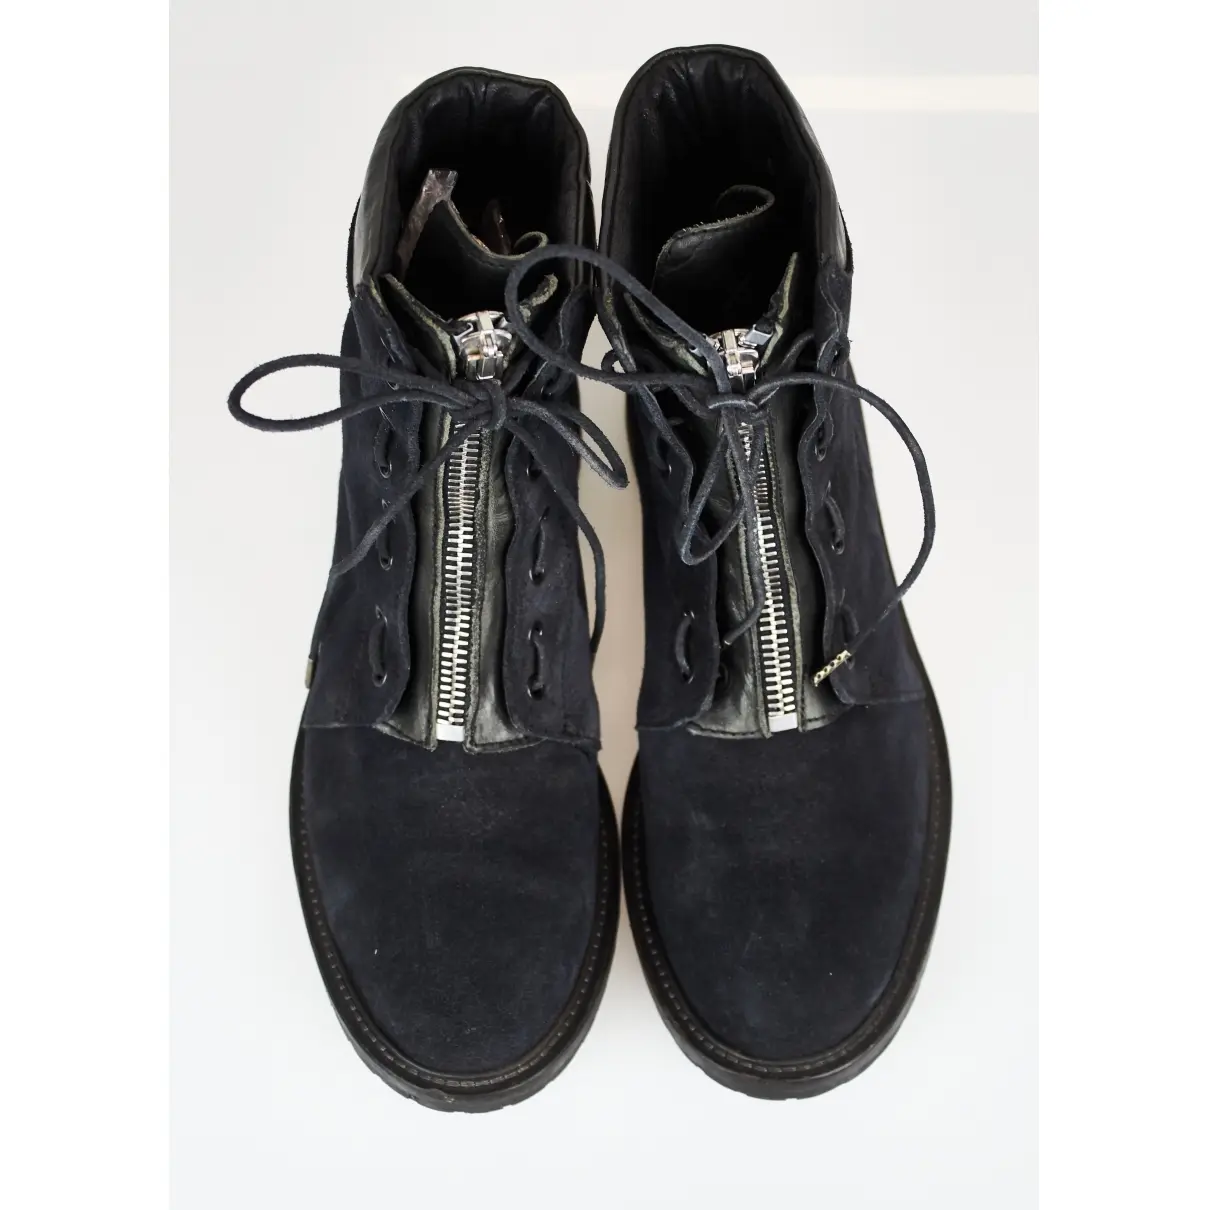 Buy All Saints Blue Suede Boots online